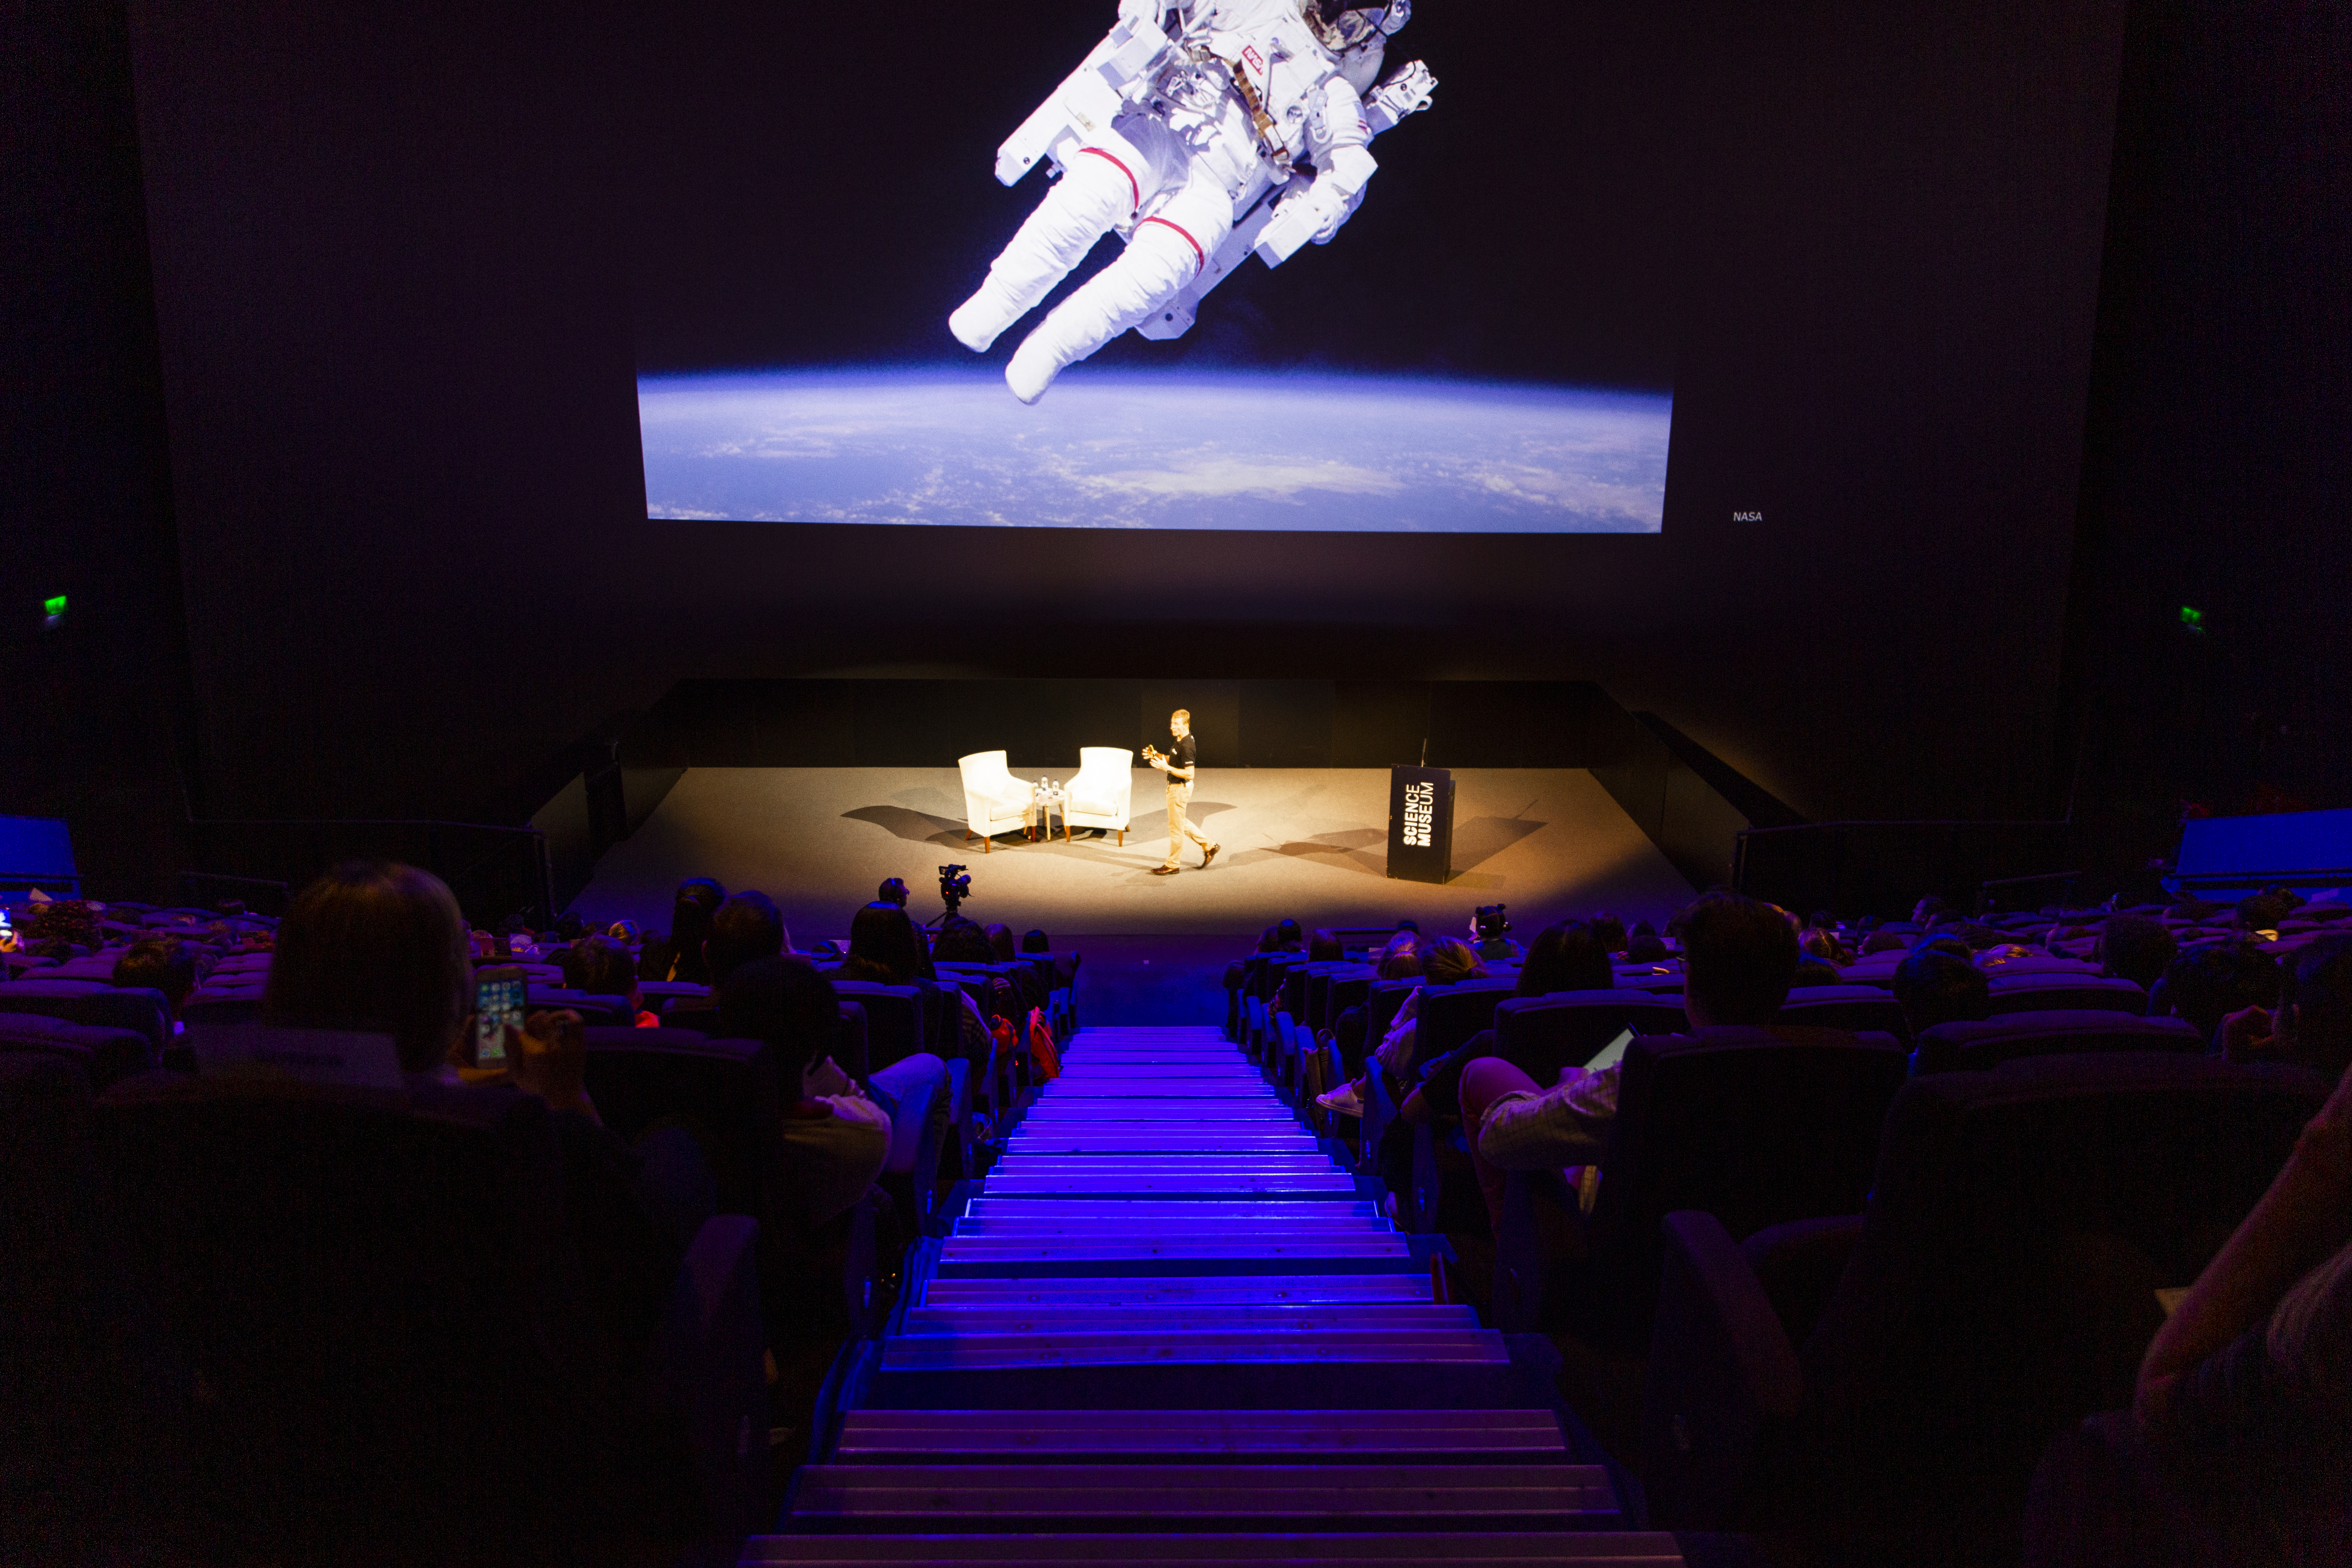 Tim Peake speaking on stage in the Science Museum's IMAX auditorium.